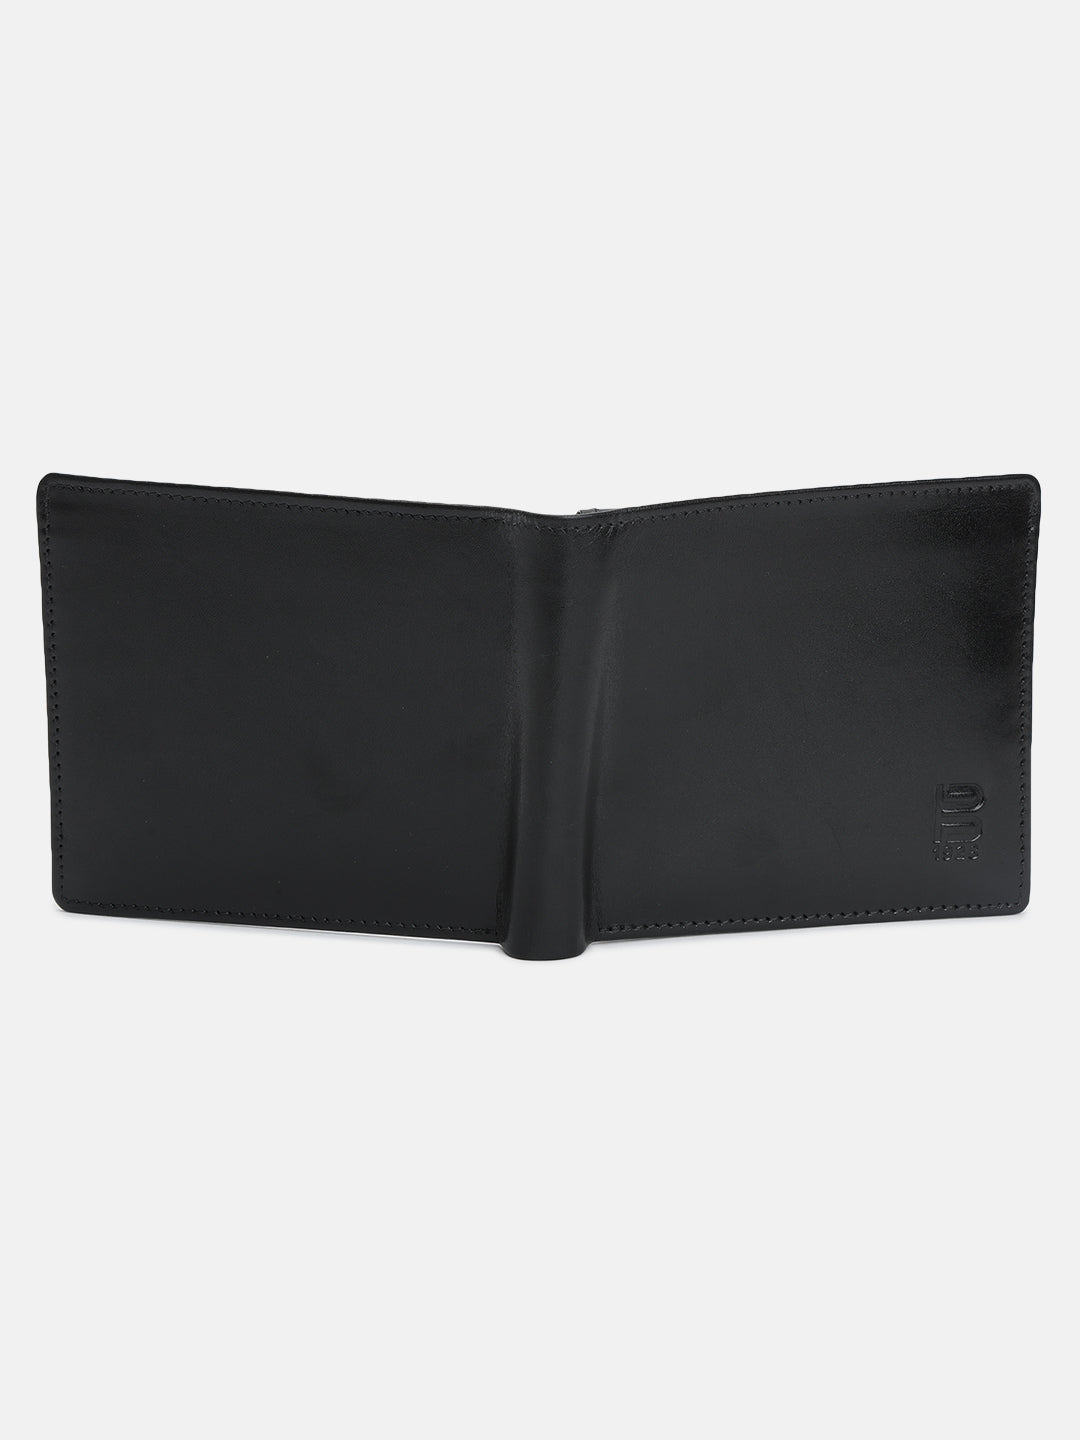 BAGATT Black Bi-Fold Wallet